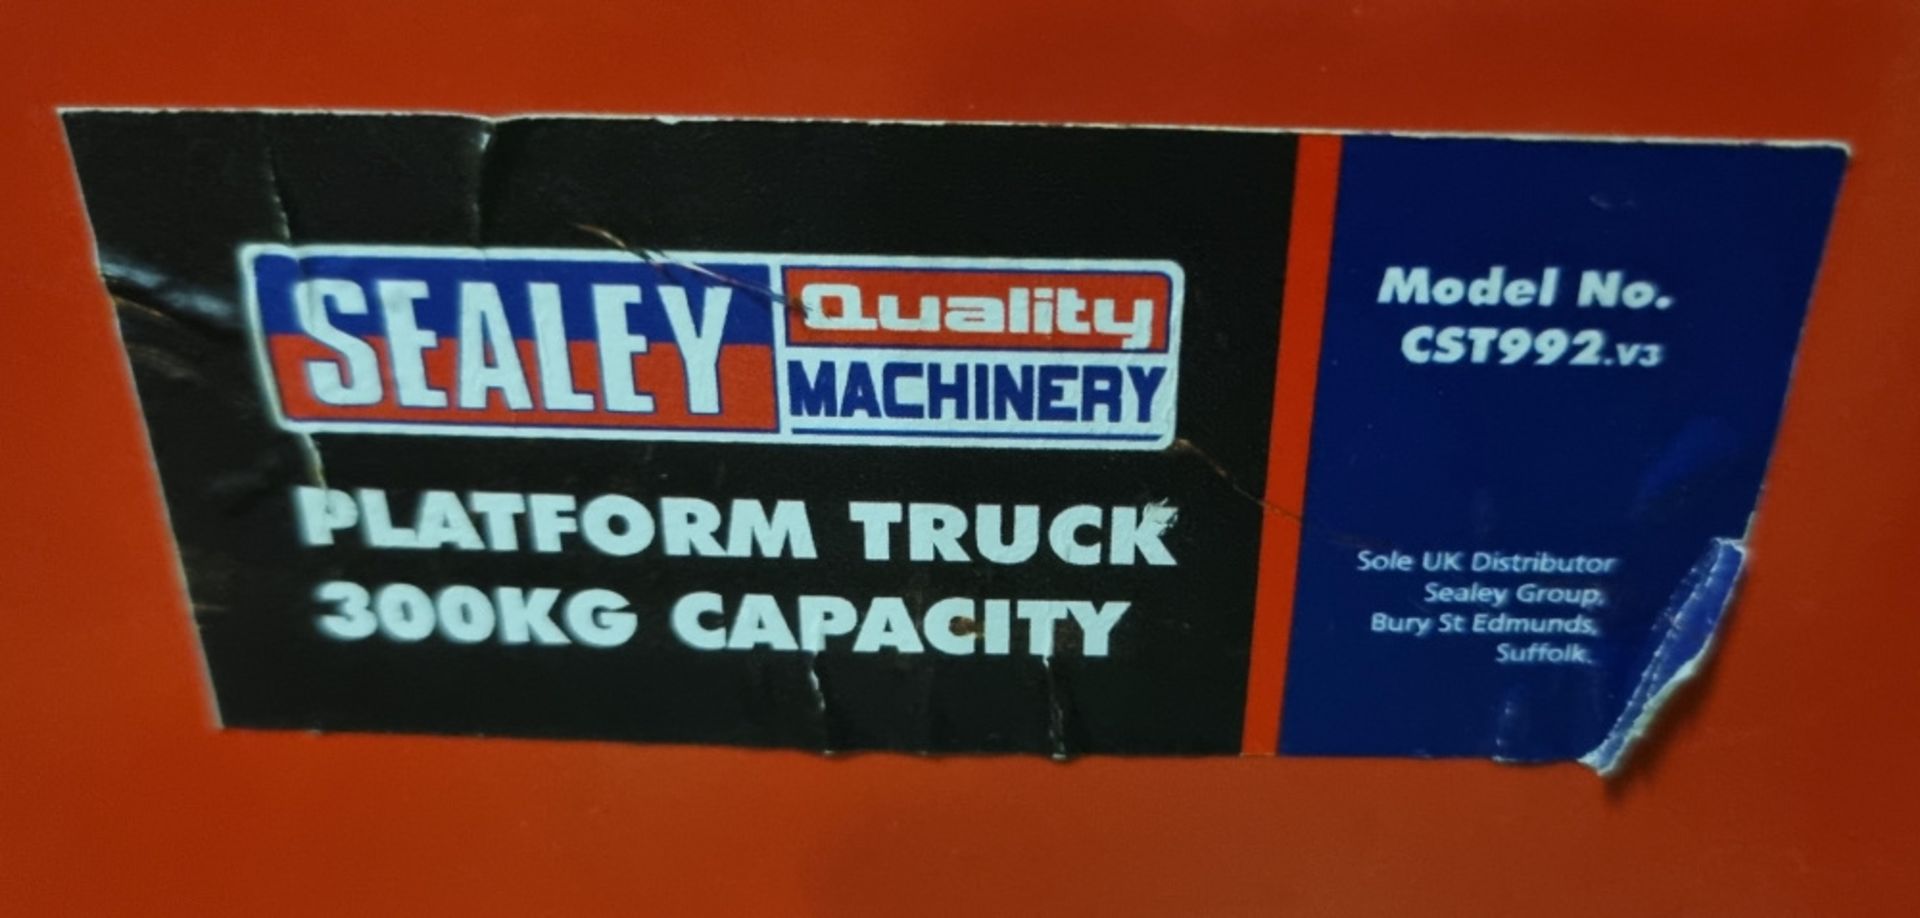 Sealey Platform truck - 300kg capacity - Image 4 of 5